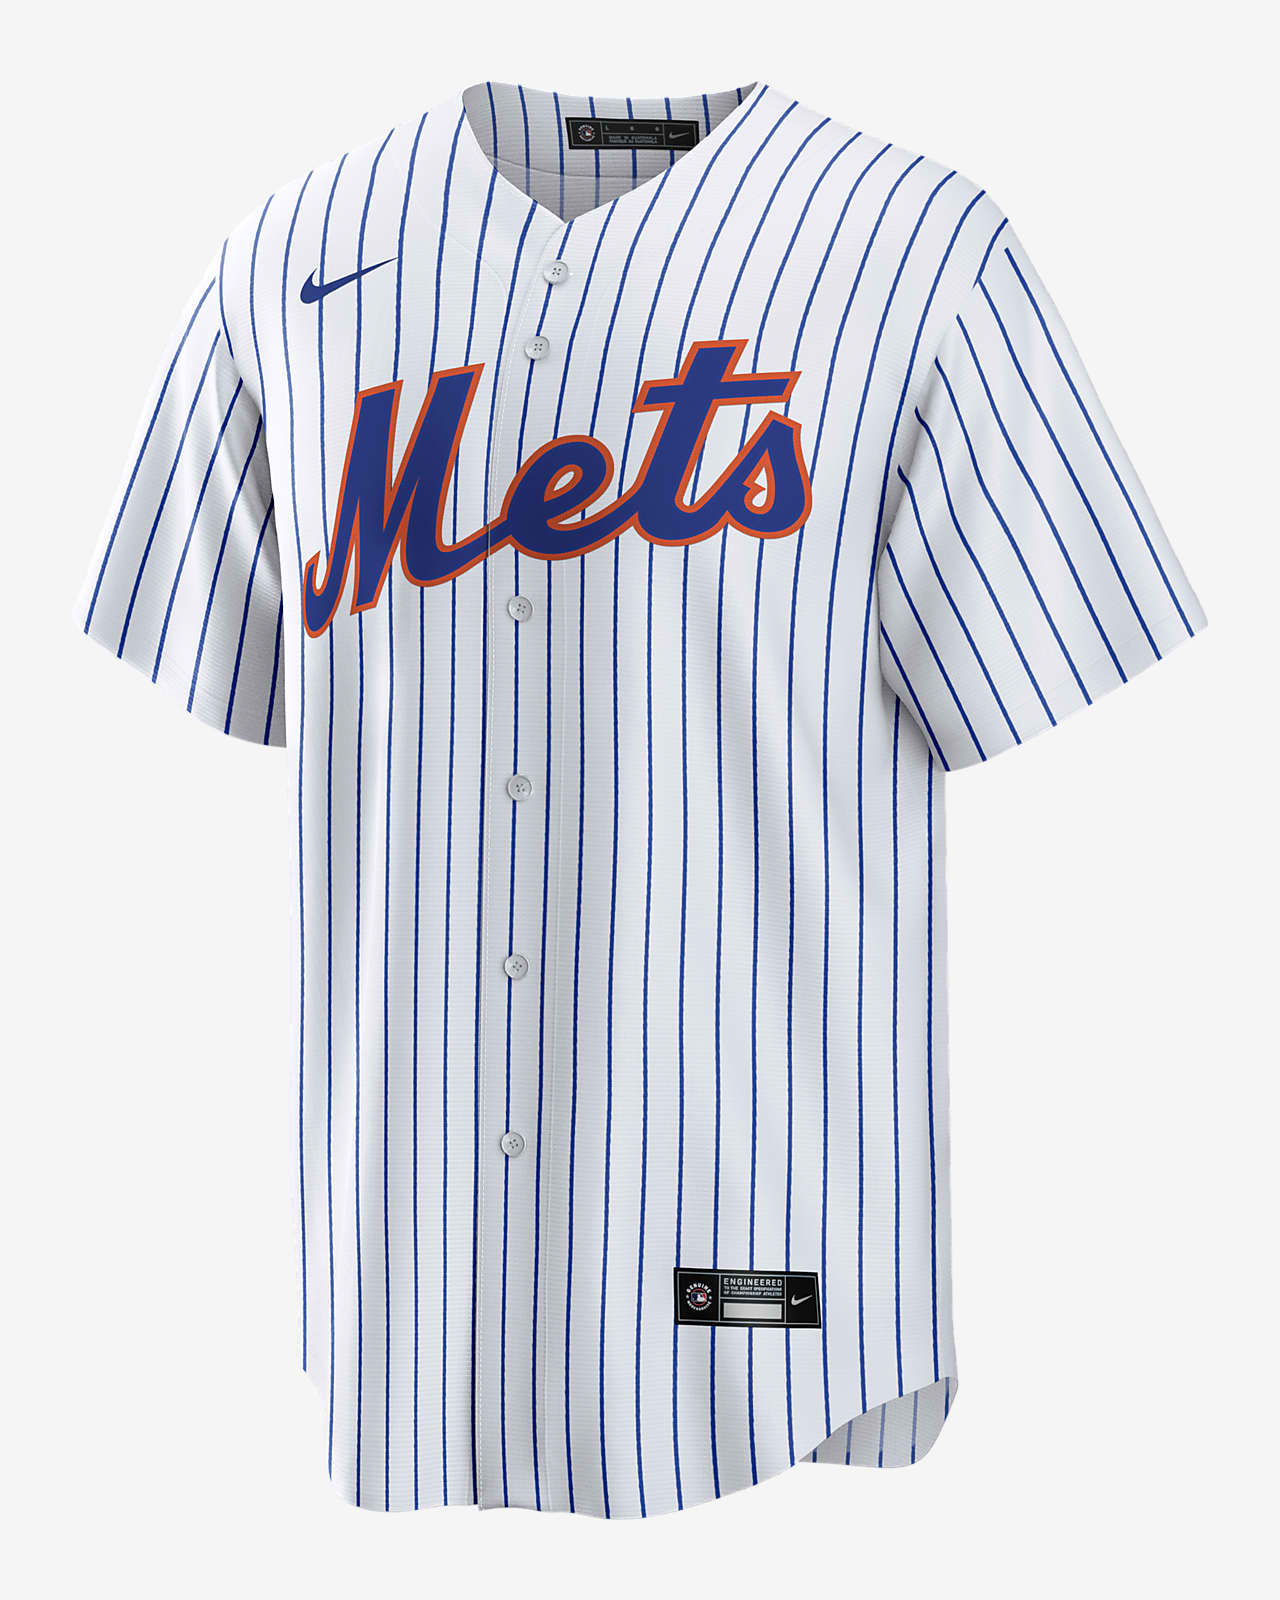 Dwight Gooden New York Mets Men's Nike MLB Replica Jersey